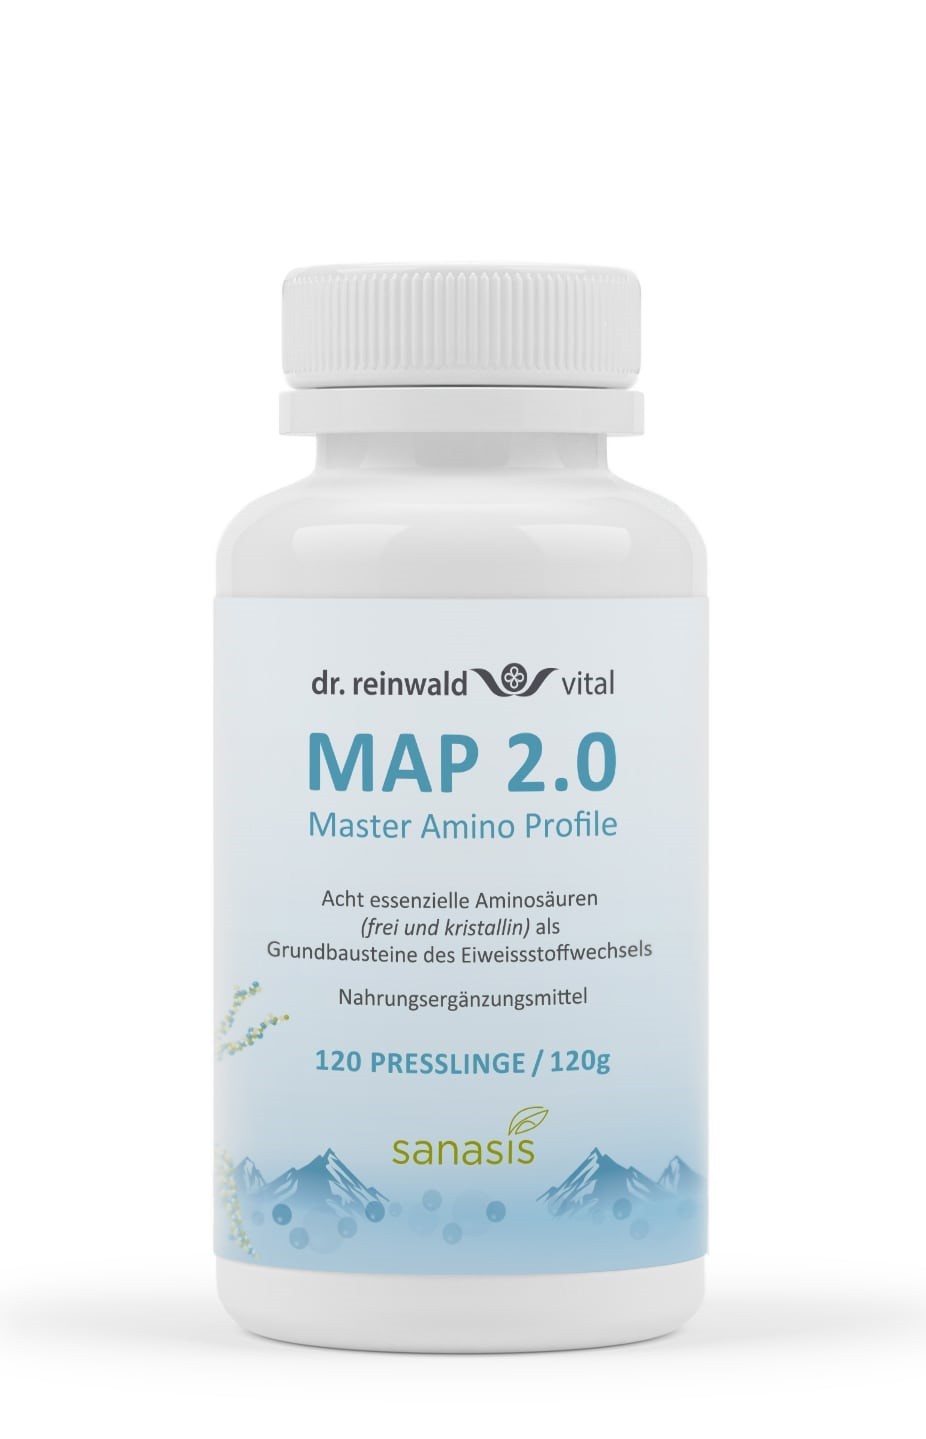 Image of sanasis MAP 2.0 Master Amino Tablette Pattern (120 Stk)